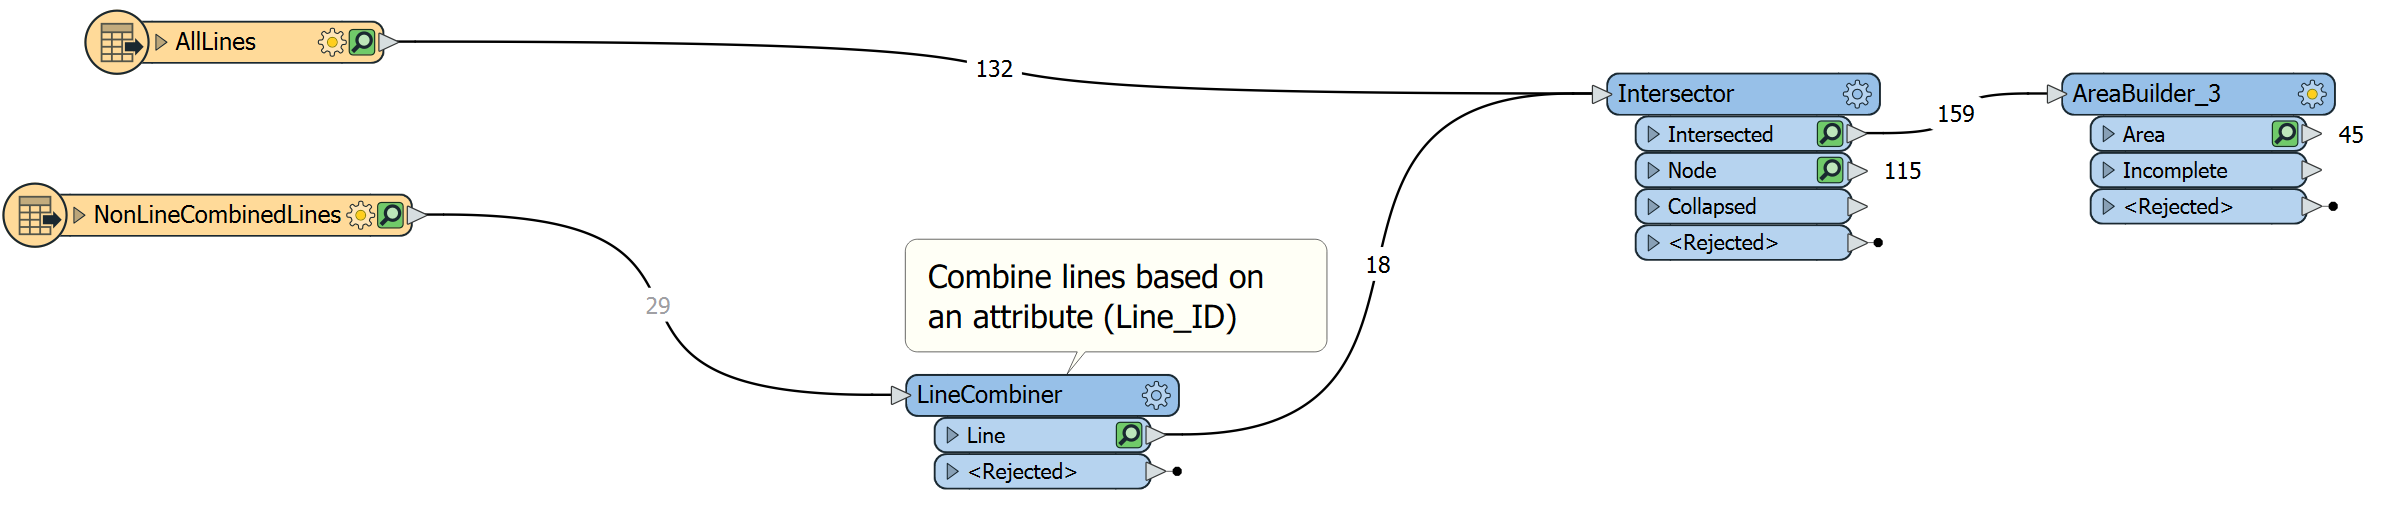 LineCombiner - Intersector